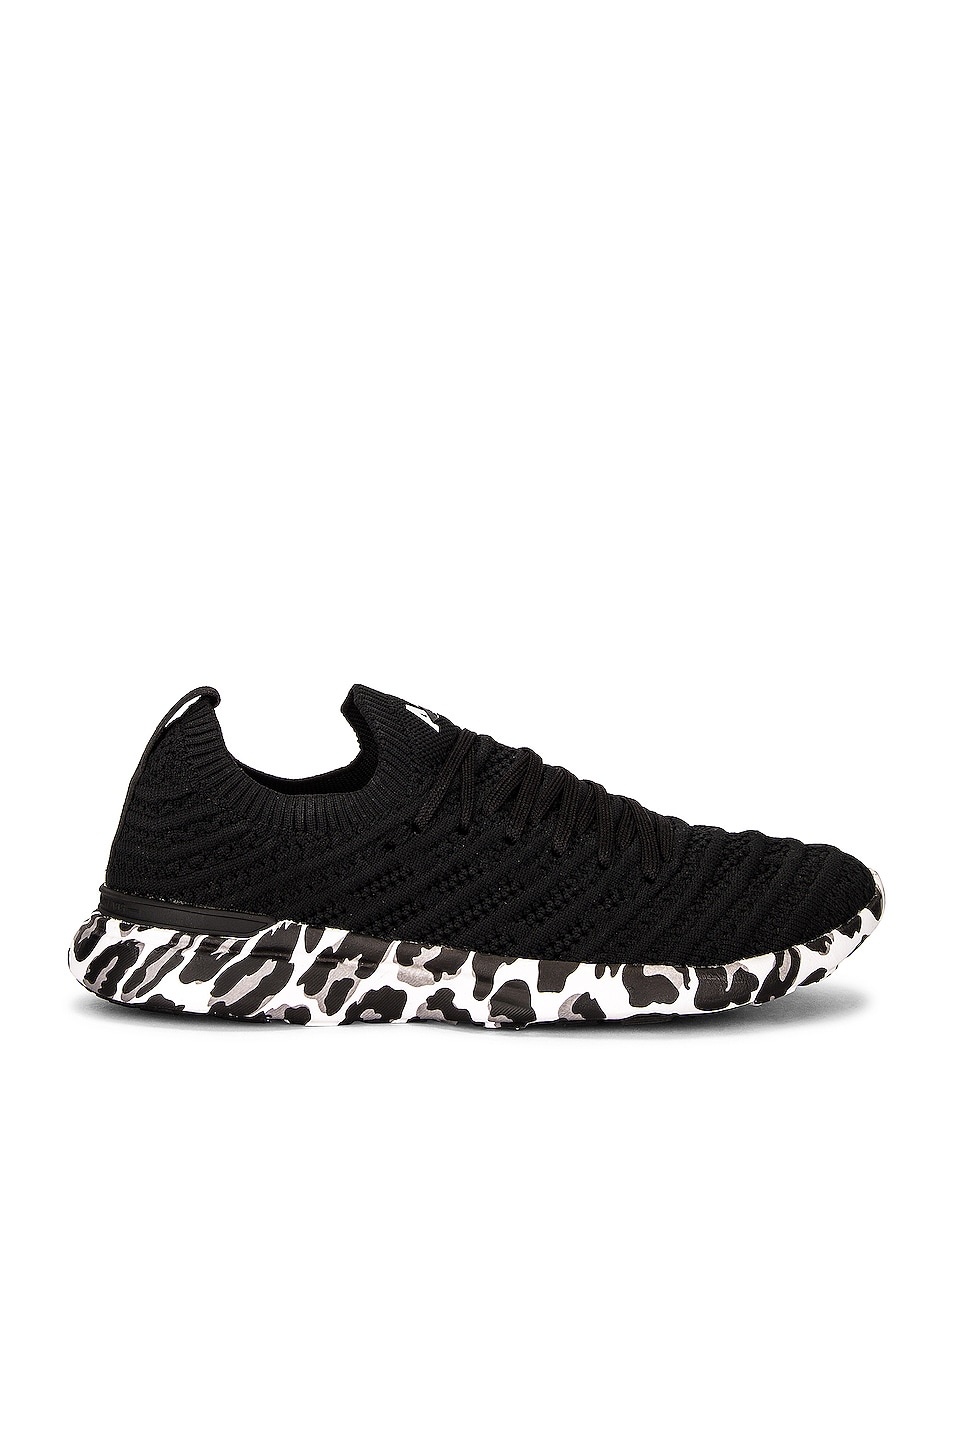 Image 1 of APL: Athletic Propulsion Labs TechLoom Wave Sneaker in Black, White & Leopard